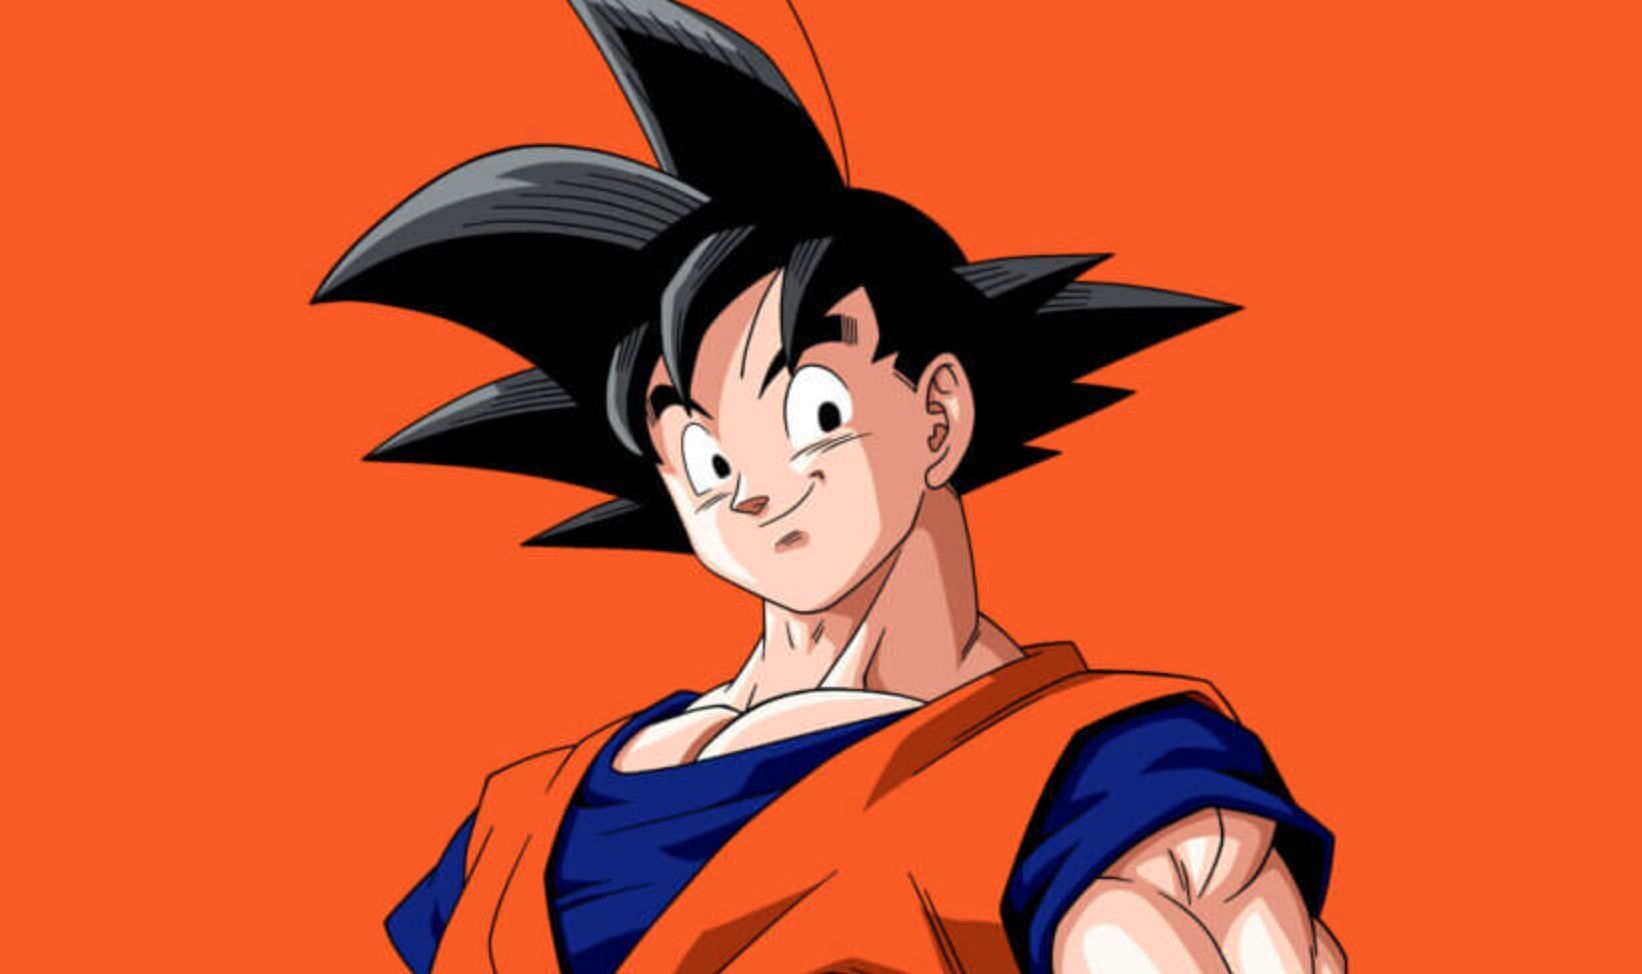 Goku from the anime (Image via Toei Animation)